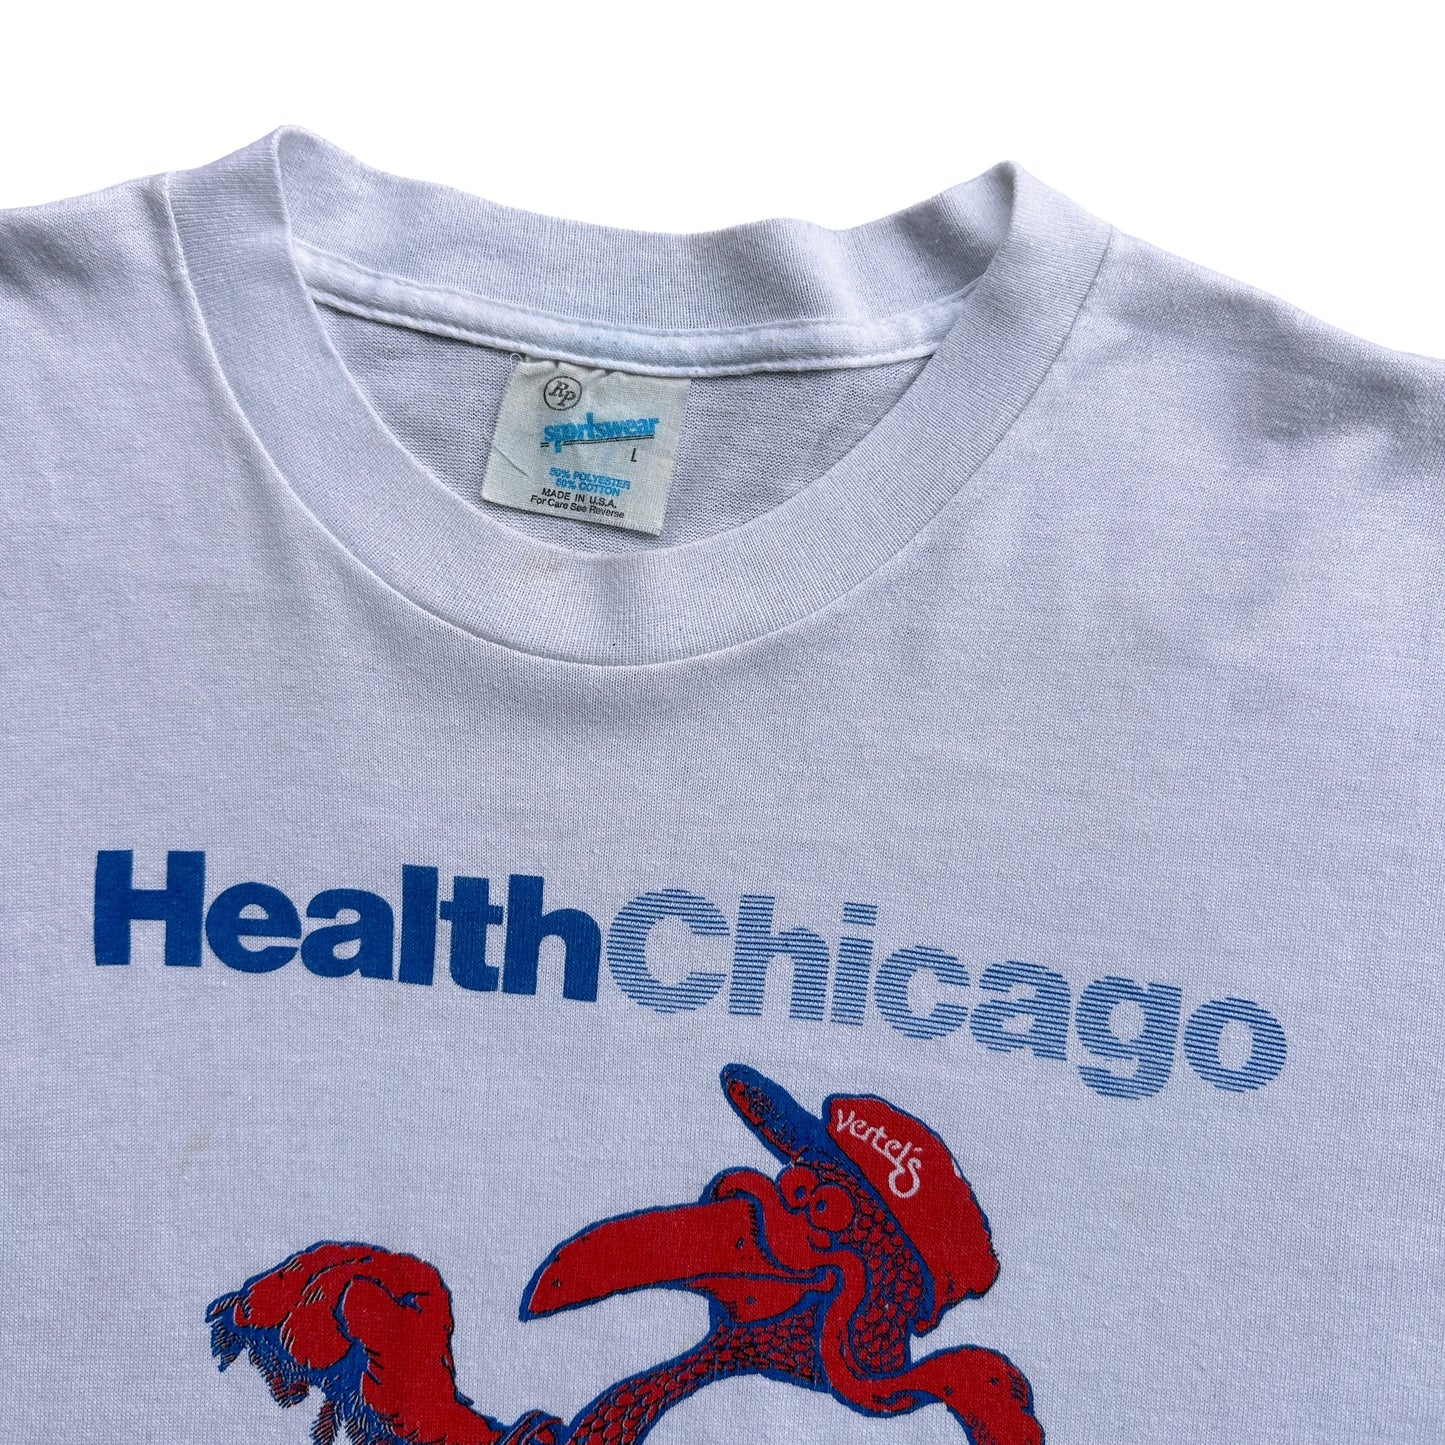 1988 Health chicago nike vertels long sleeve shirt Medium